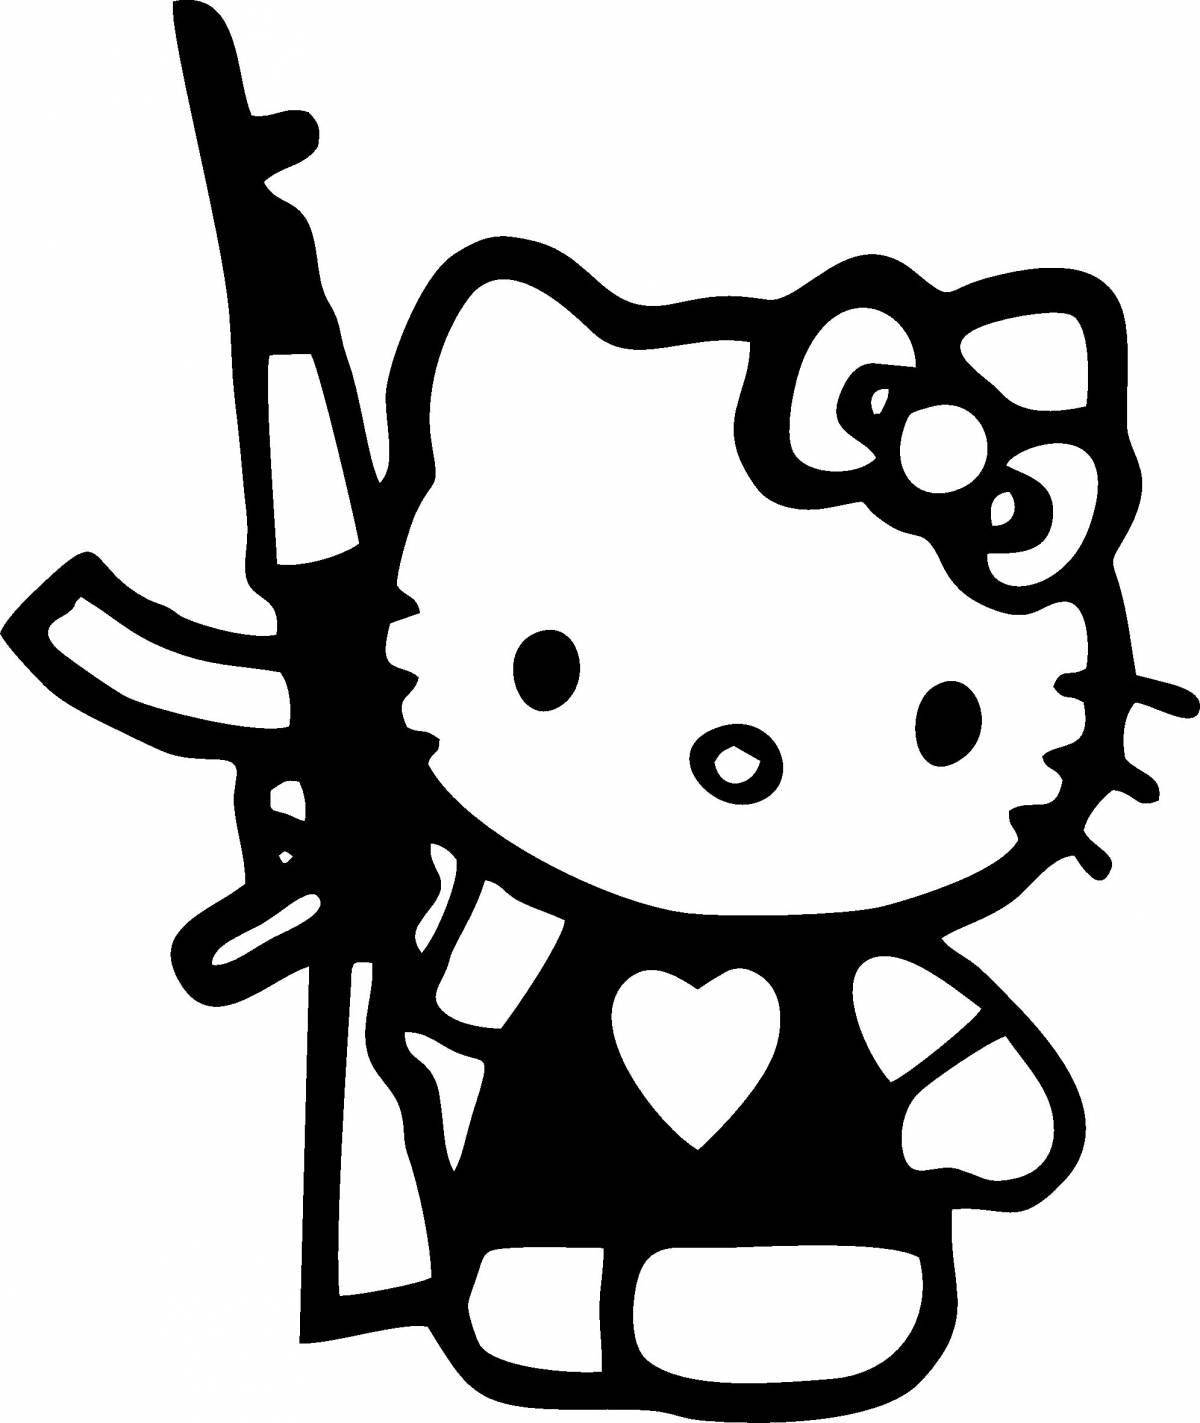 Юмористический hello kitty с пистолетом